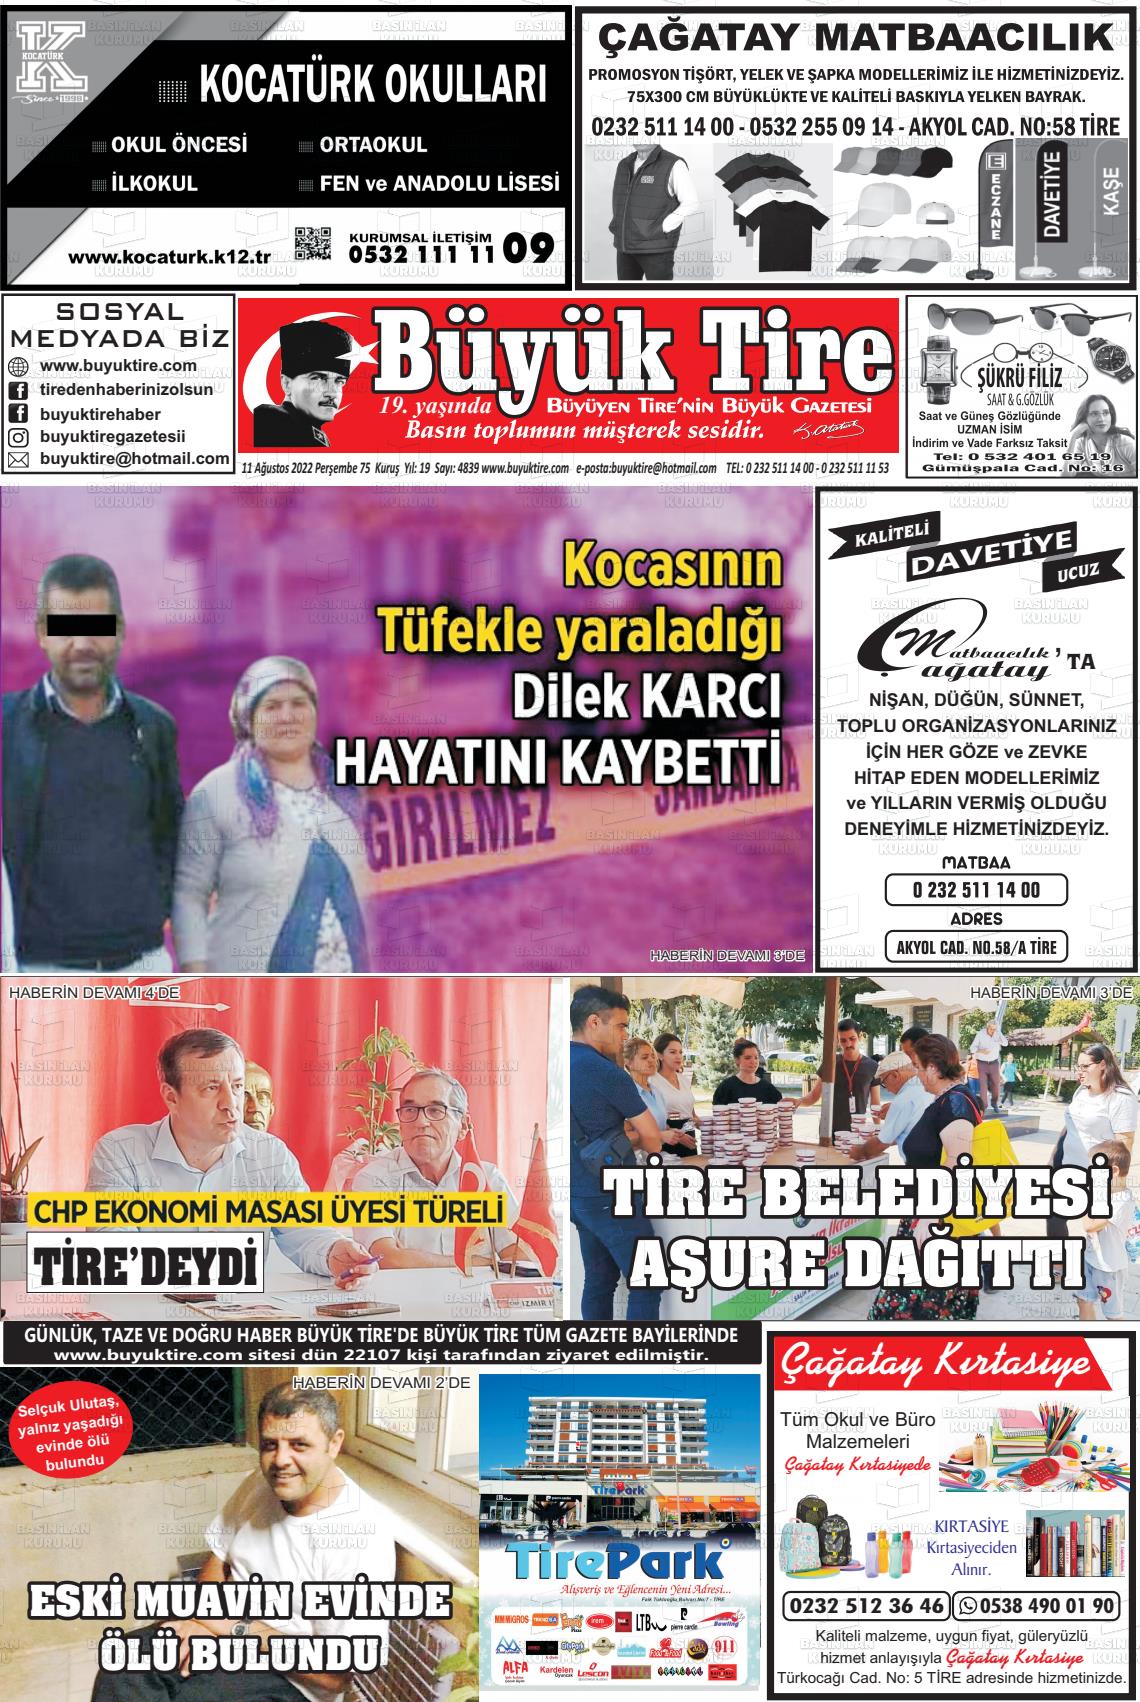 11 Ağustos 2022 Büyük Tire Gazete Manşeti